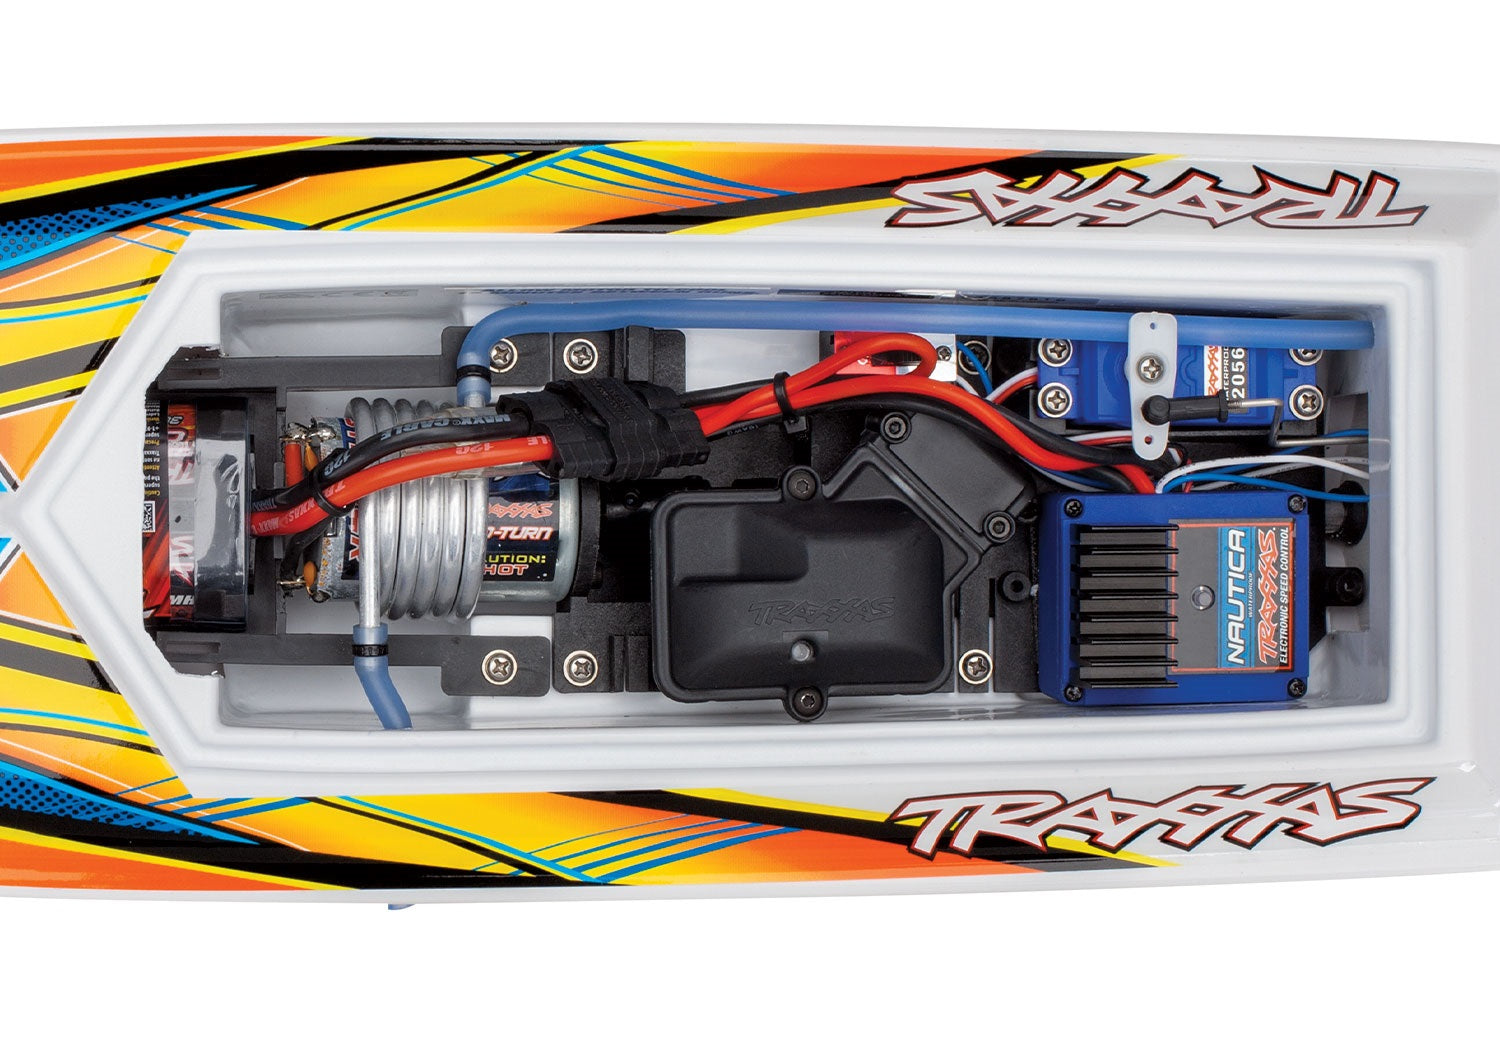 Orange Blast: High Performance Race Boat with TQ™ 2.4GHz Radio System